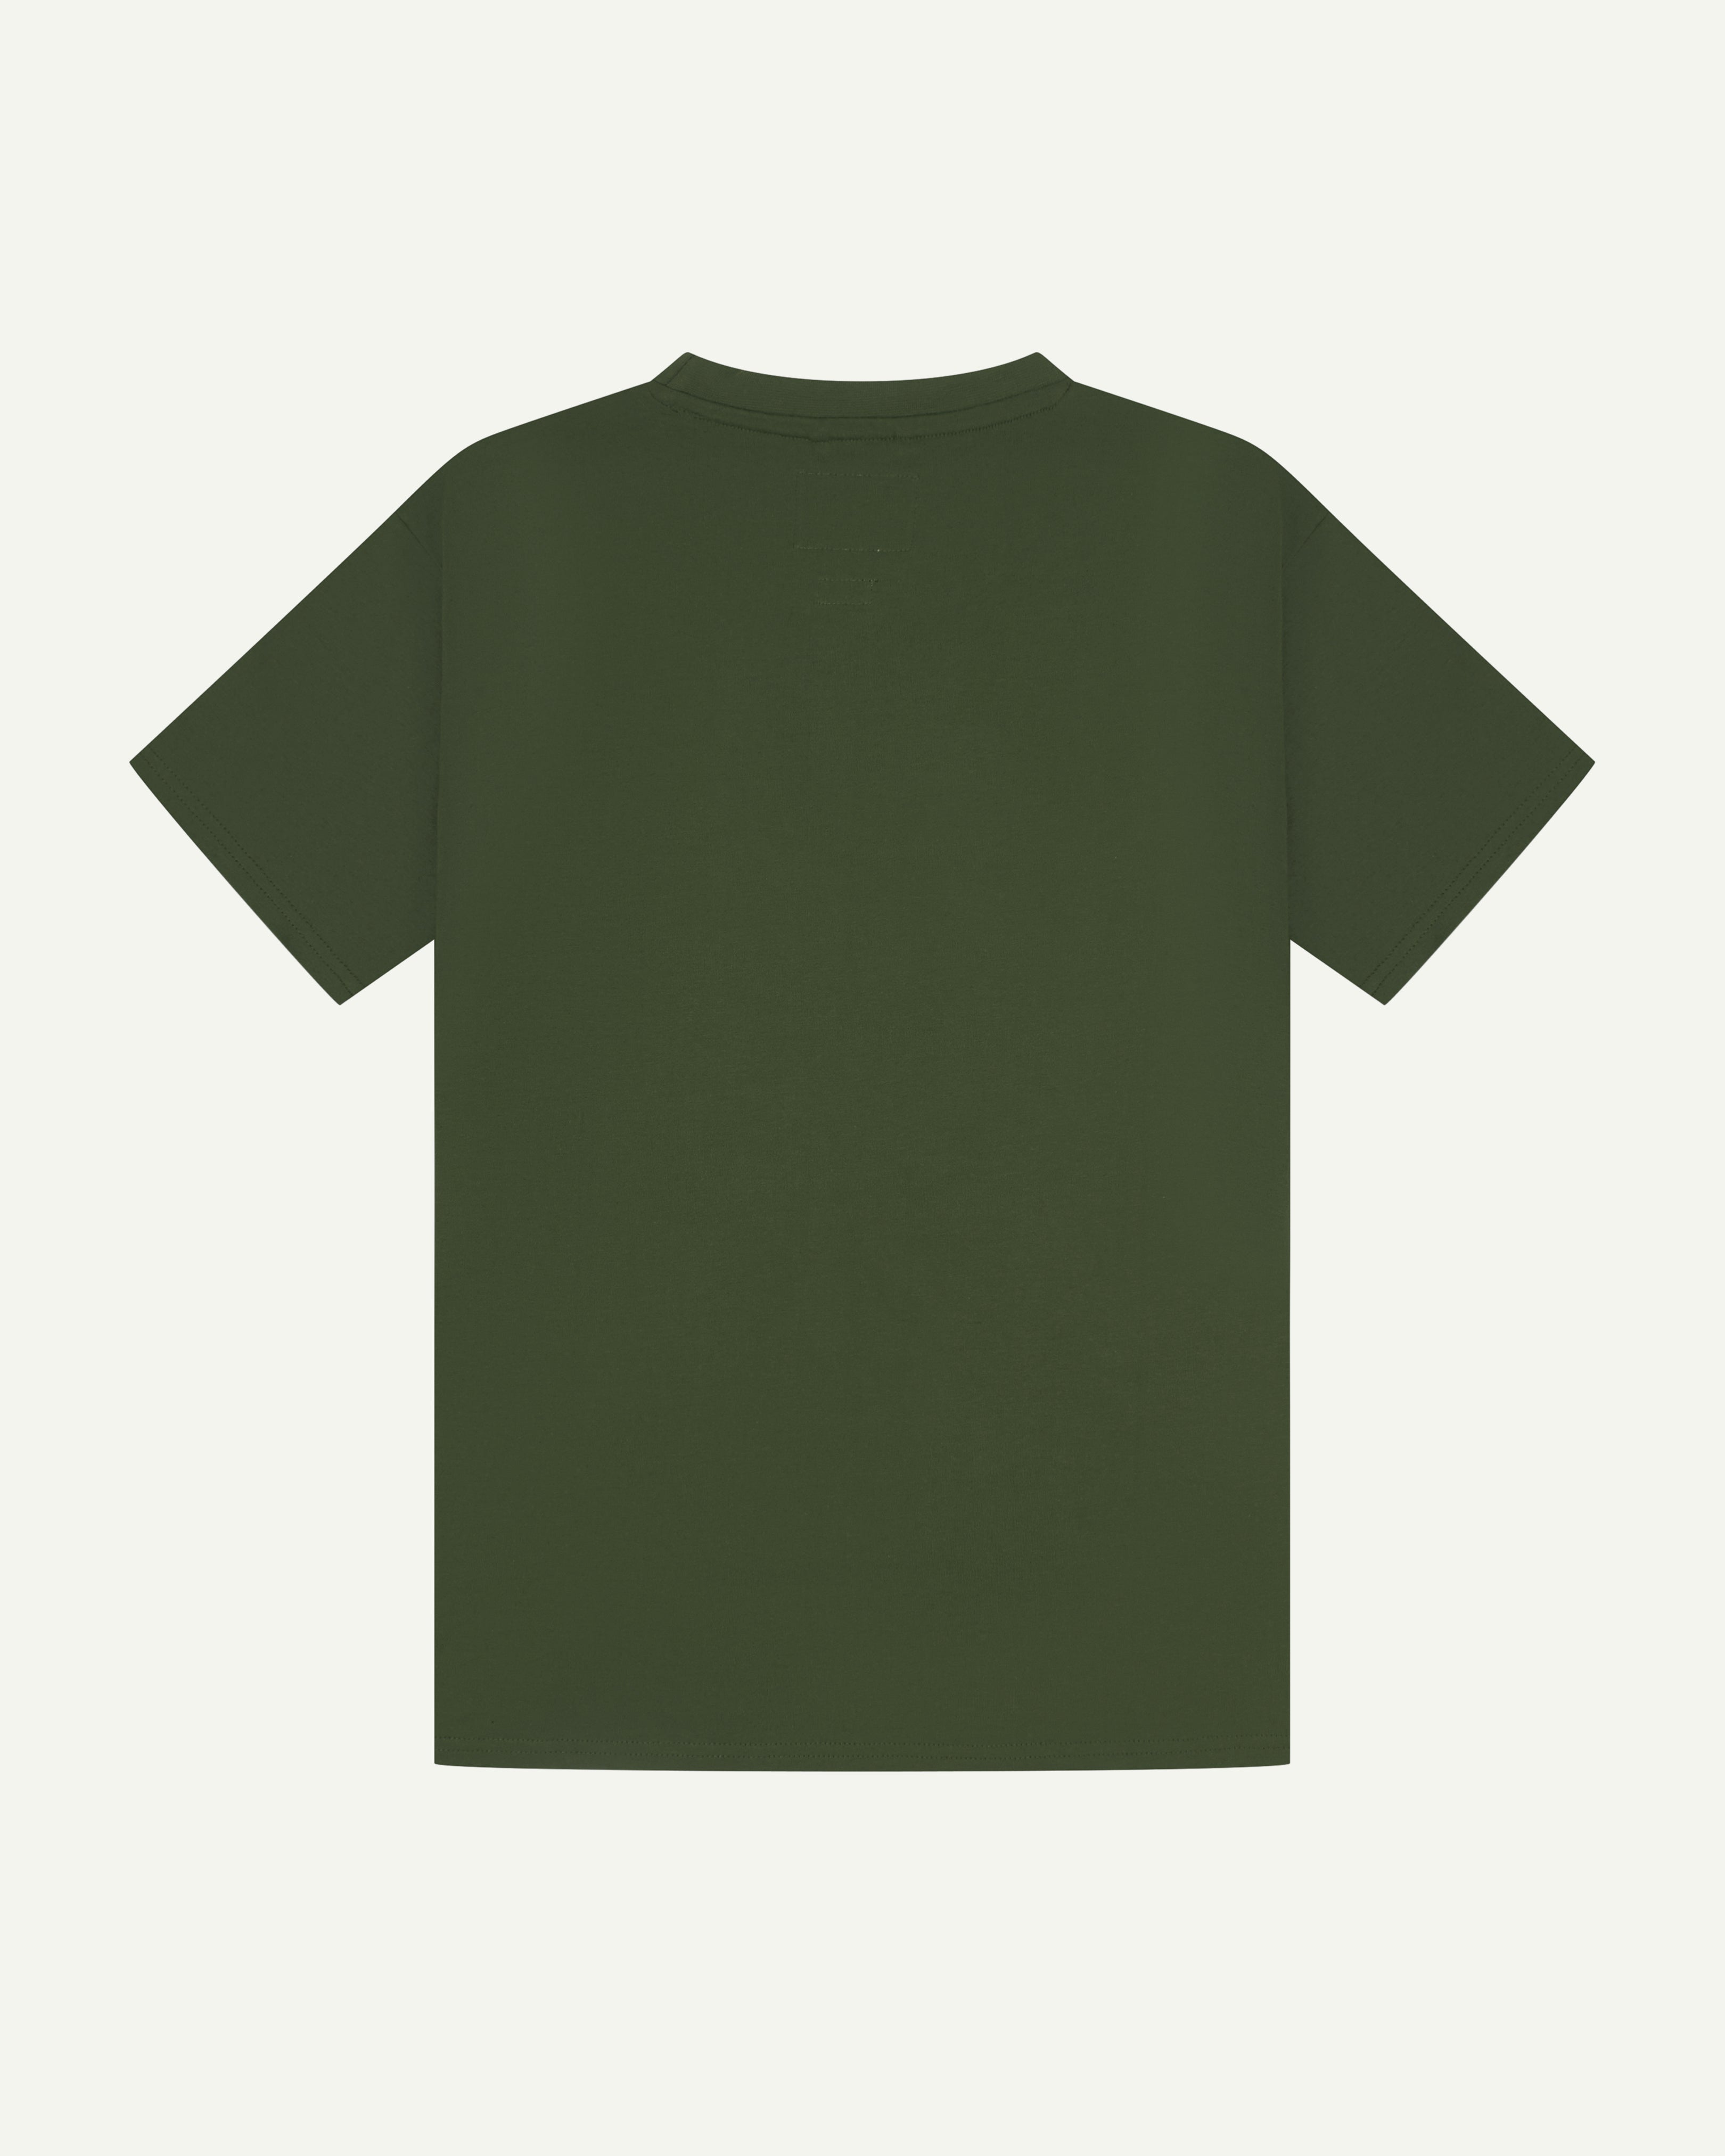 #7006 t-shirt - coriander